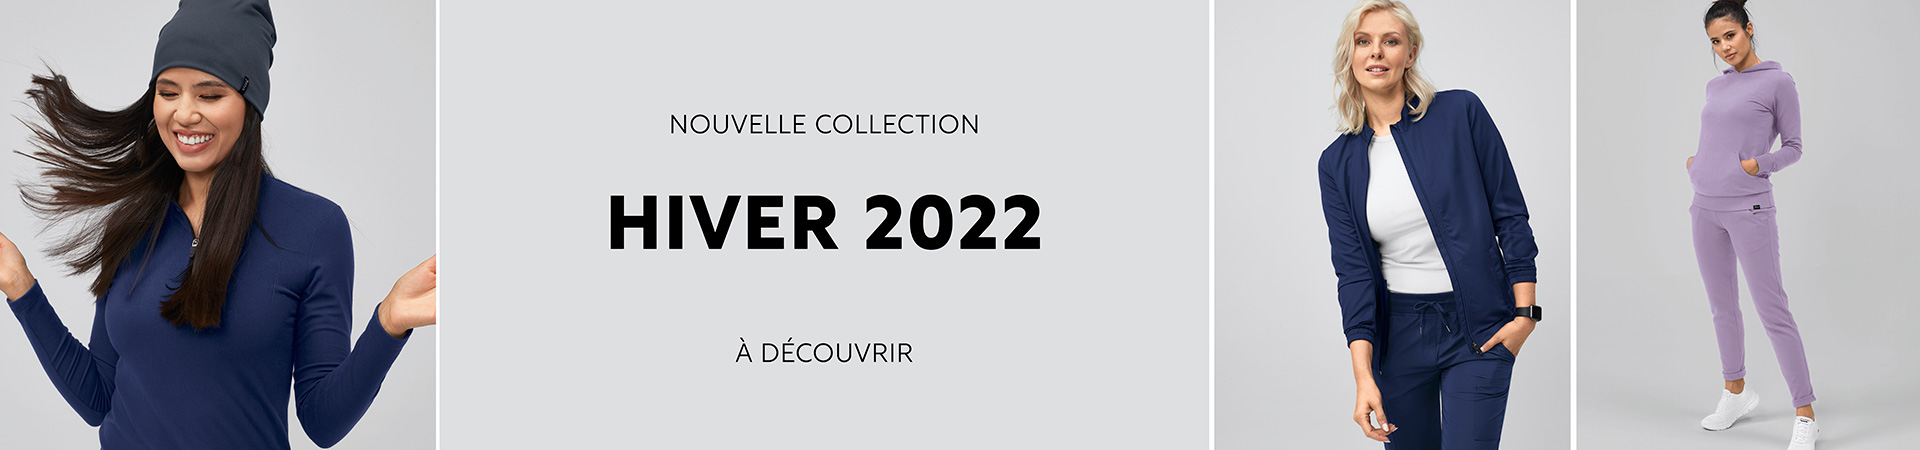 Nouvelle collection 2022